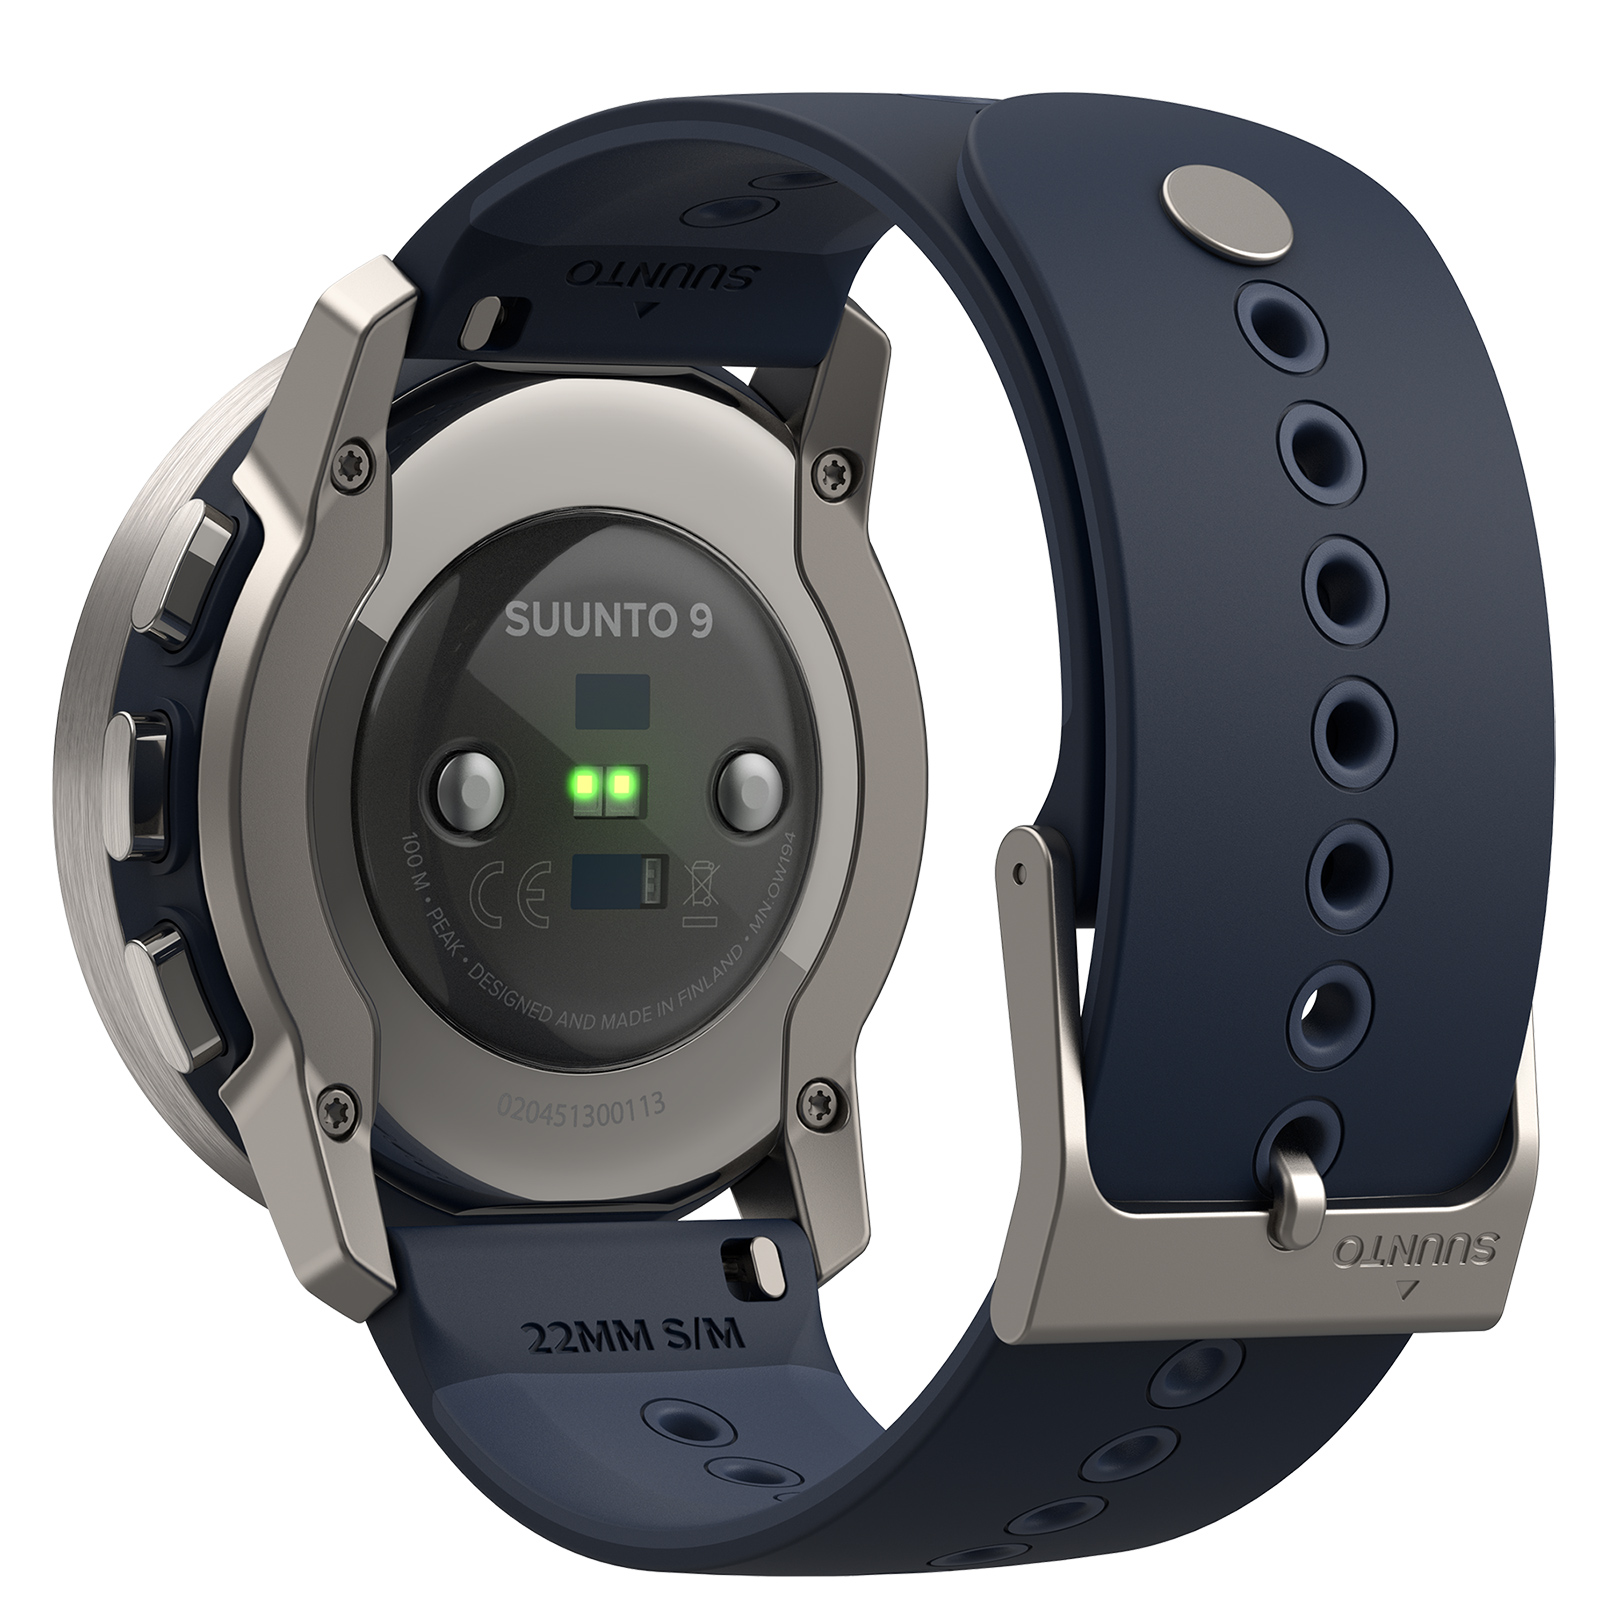 Suunto, Suunto 9 Peak: Το λεπτότερο, ισχυρότερο και ανθεκτικότερο smartwatch της εταιρείας